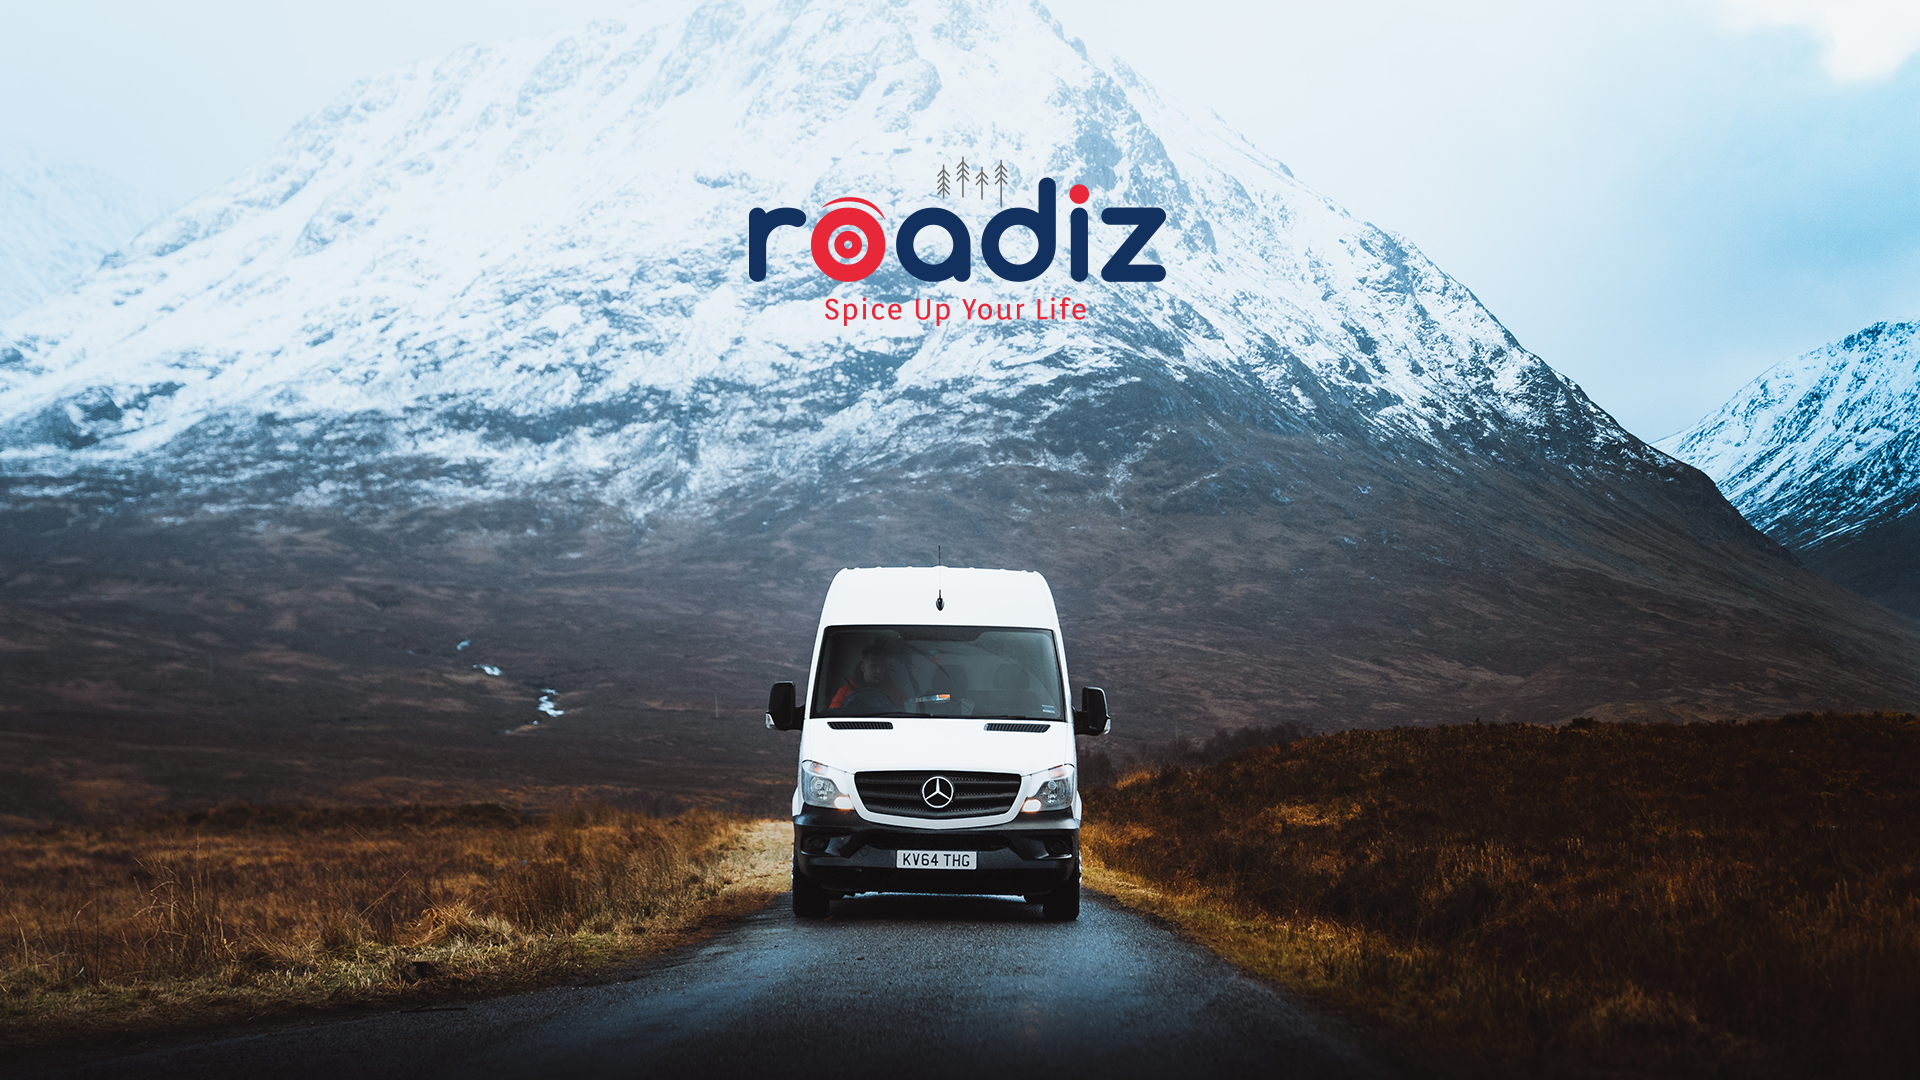 Plan Your Road Trip with Super-comfy Roadiz Campervans!!!